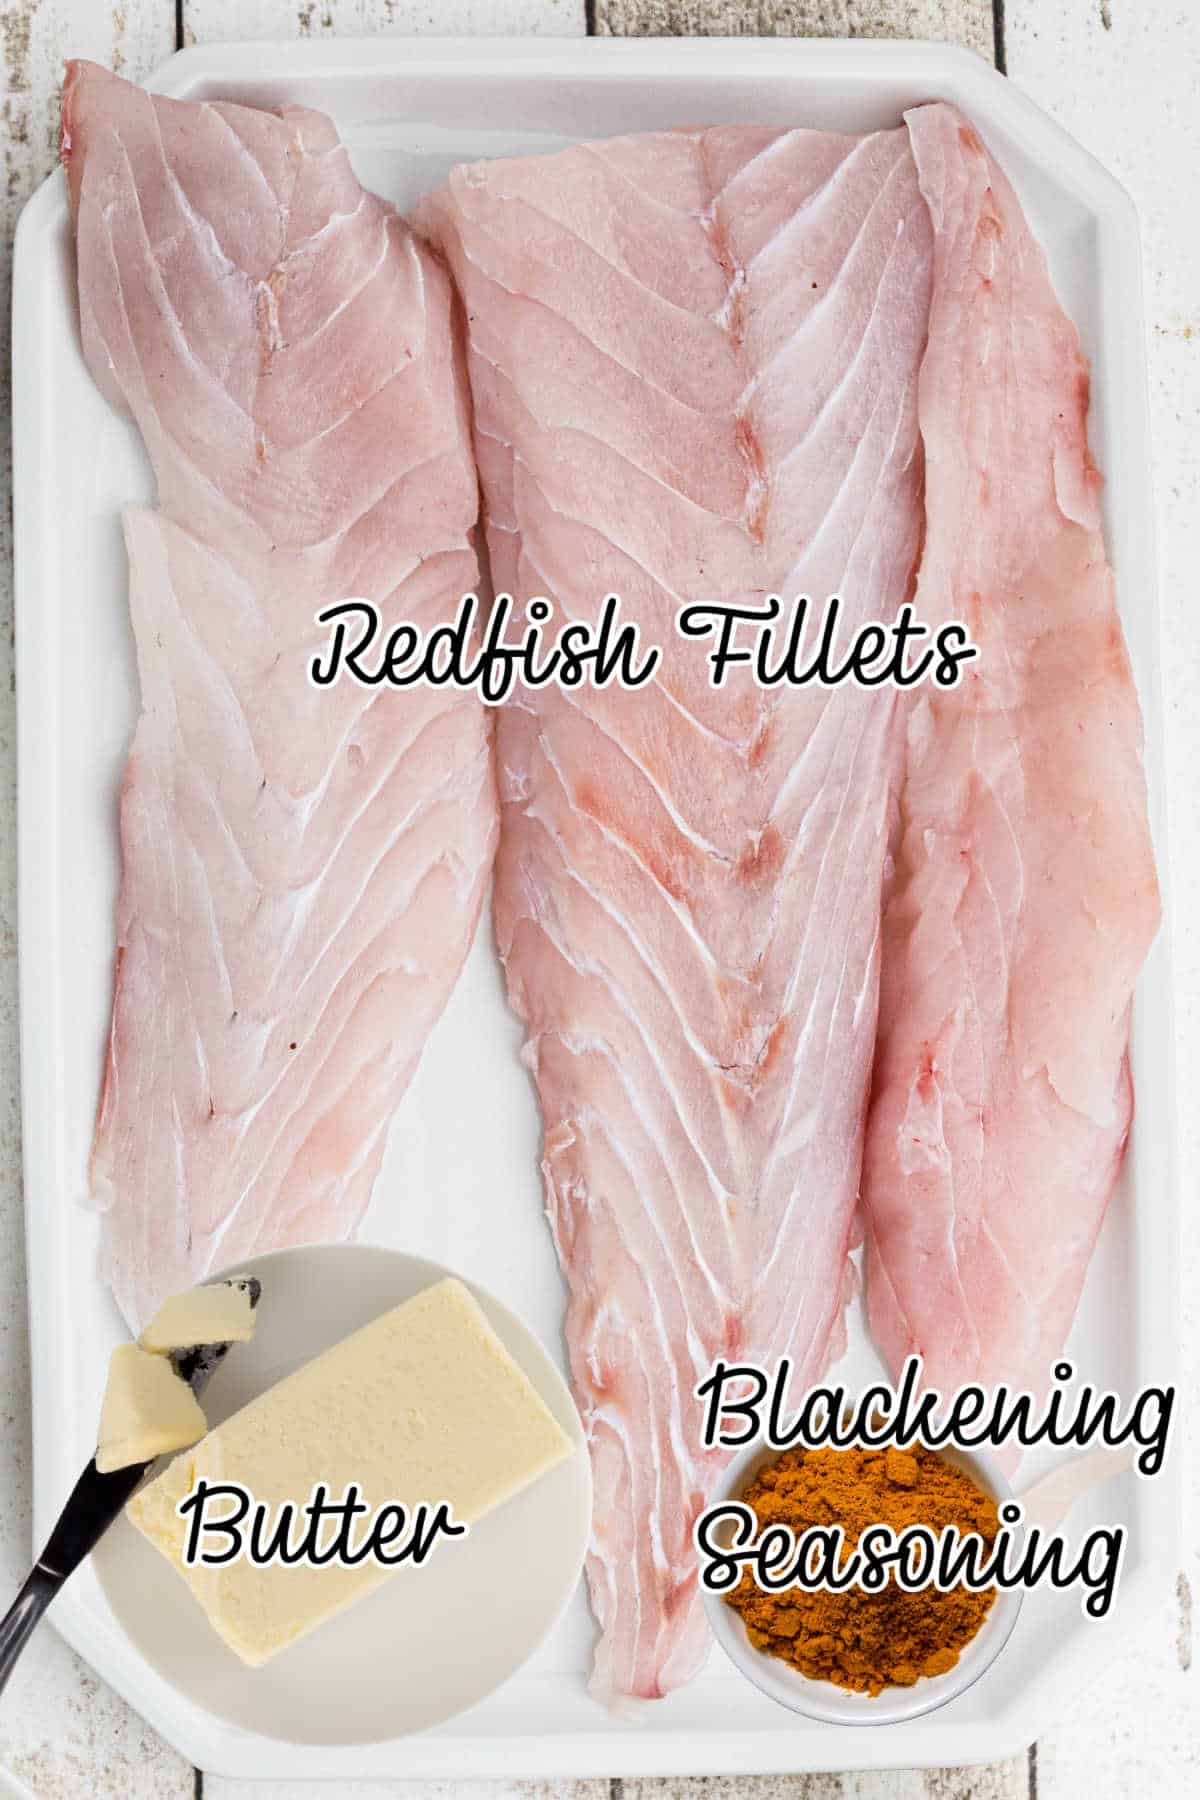 Ingredients needed to make blackened redfish.